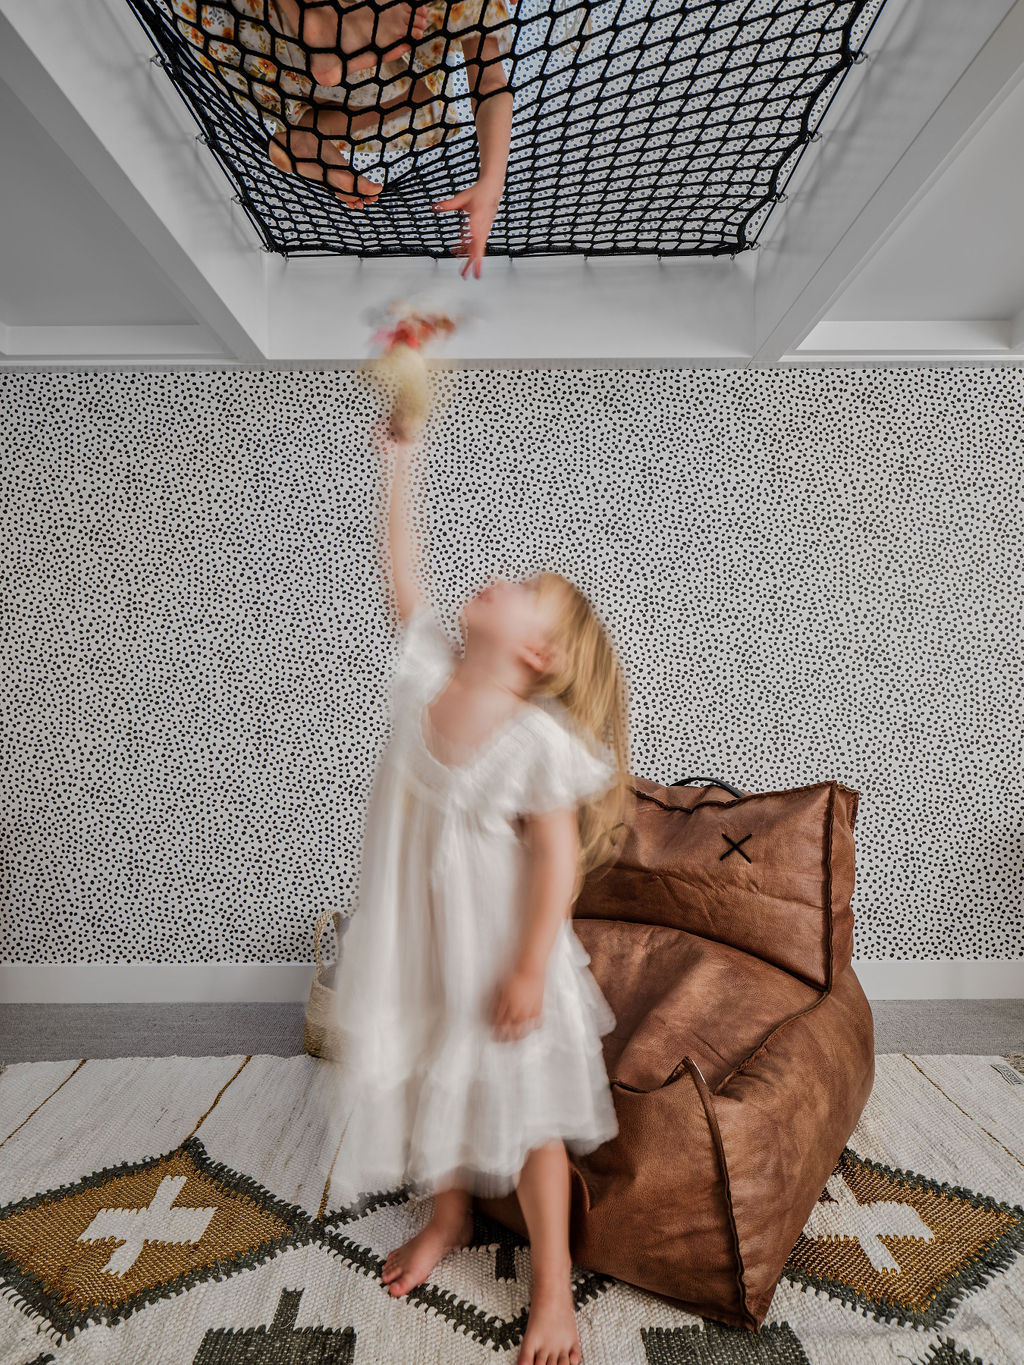 Childrens play net in dalmatian print bedroom